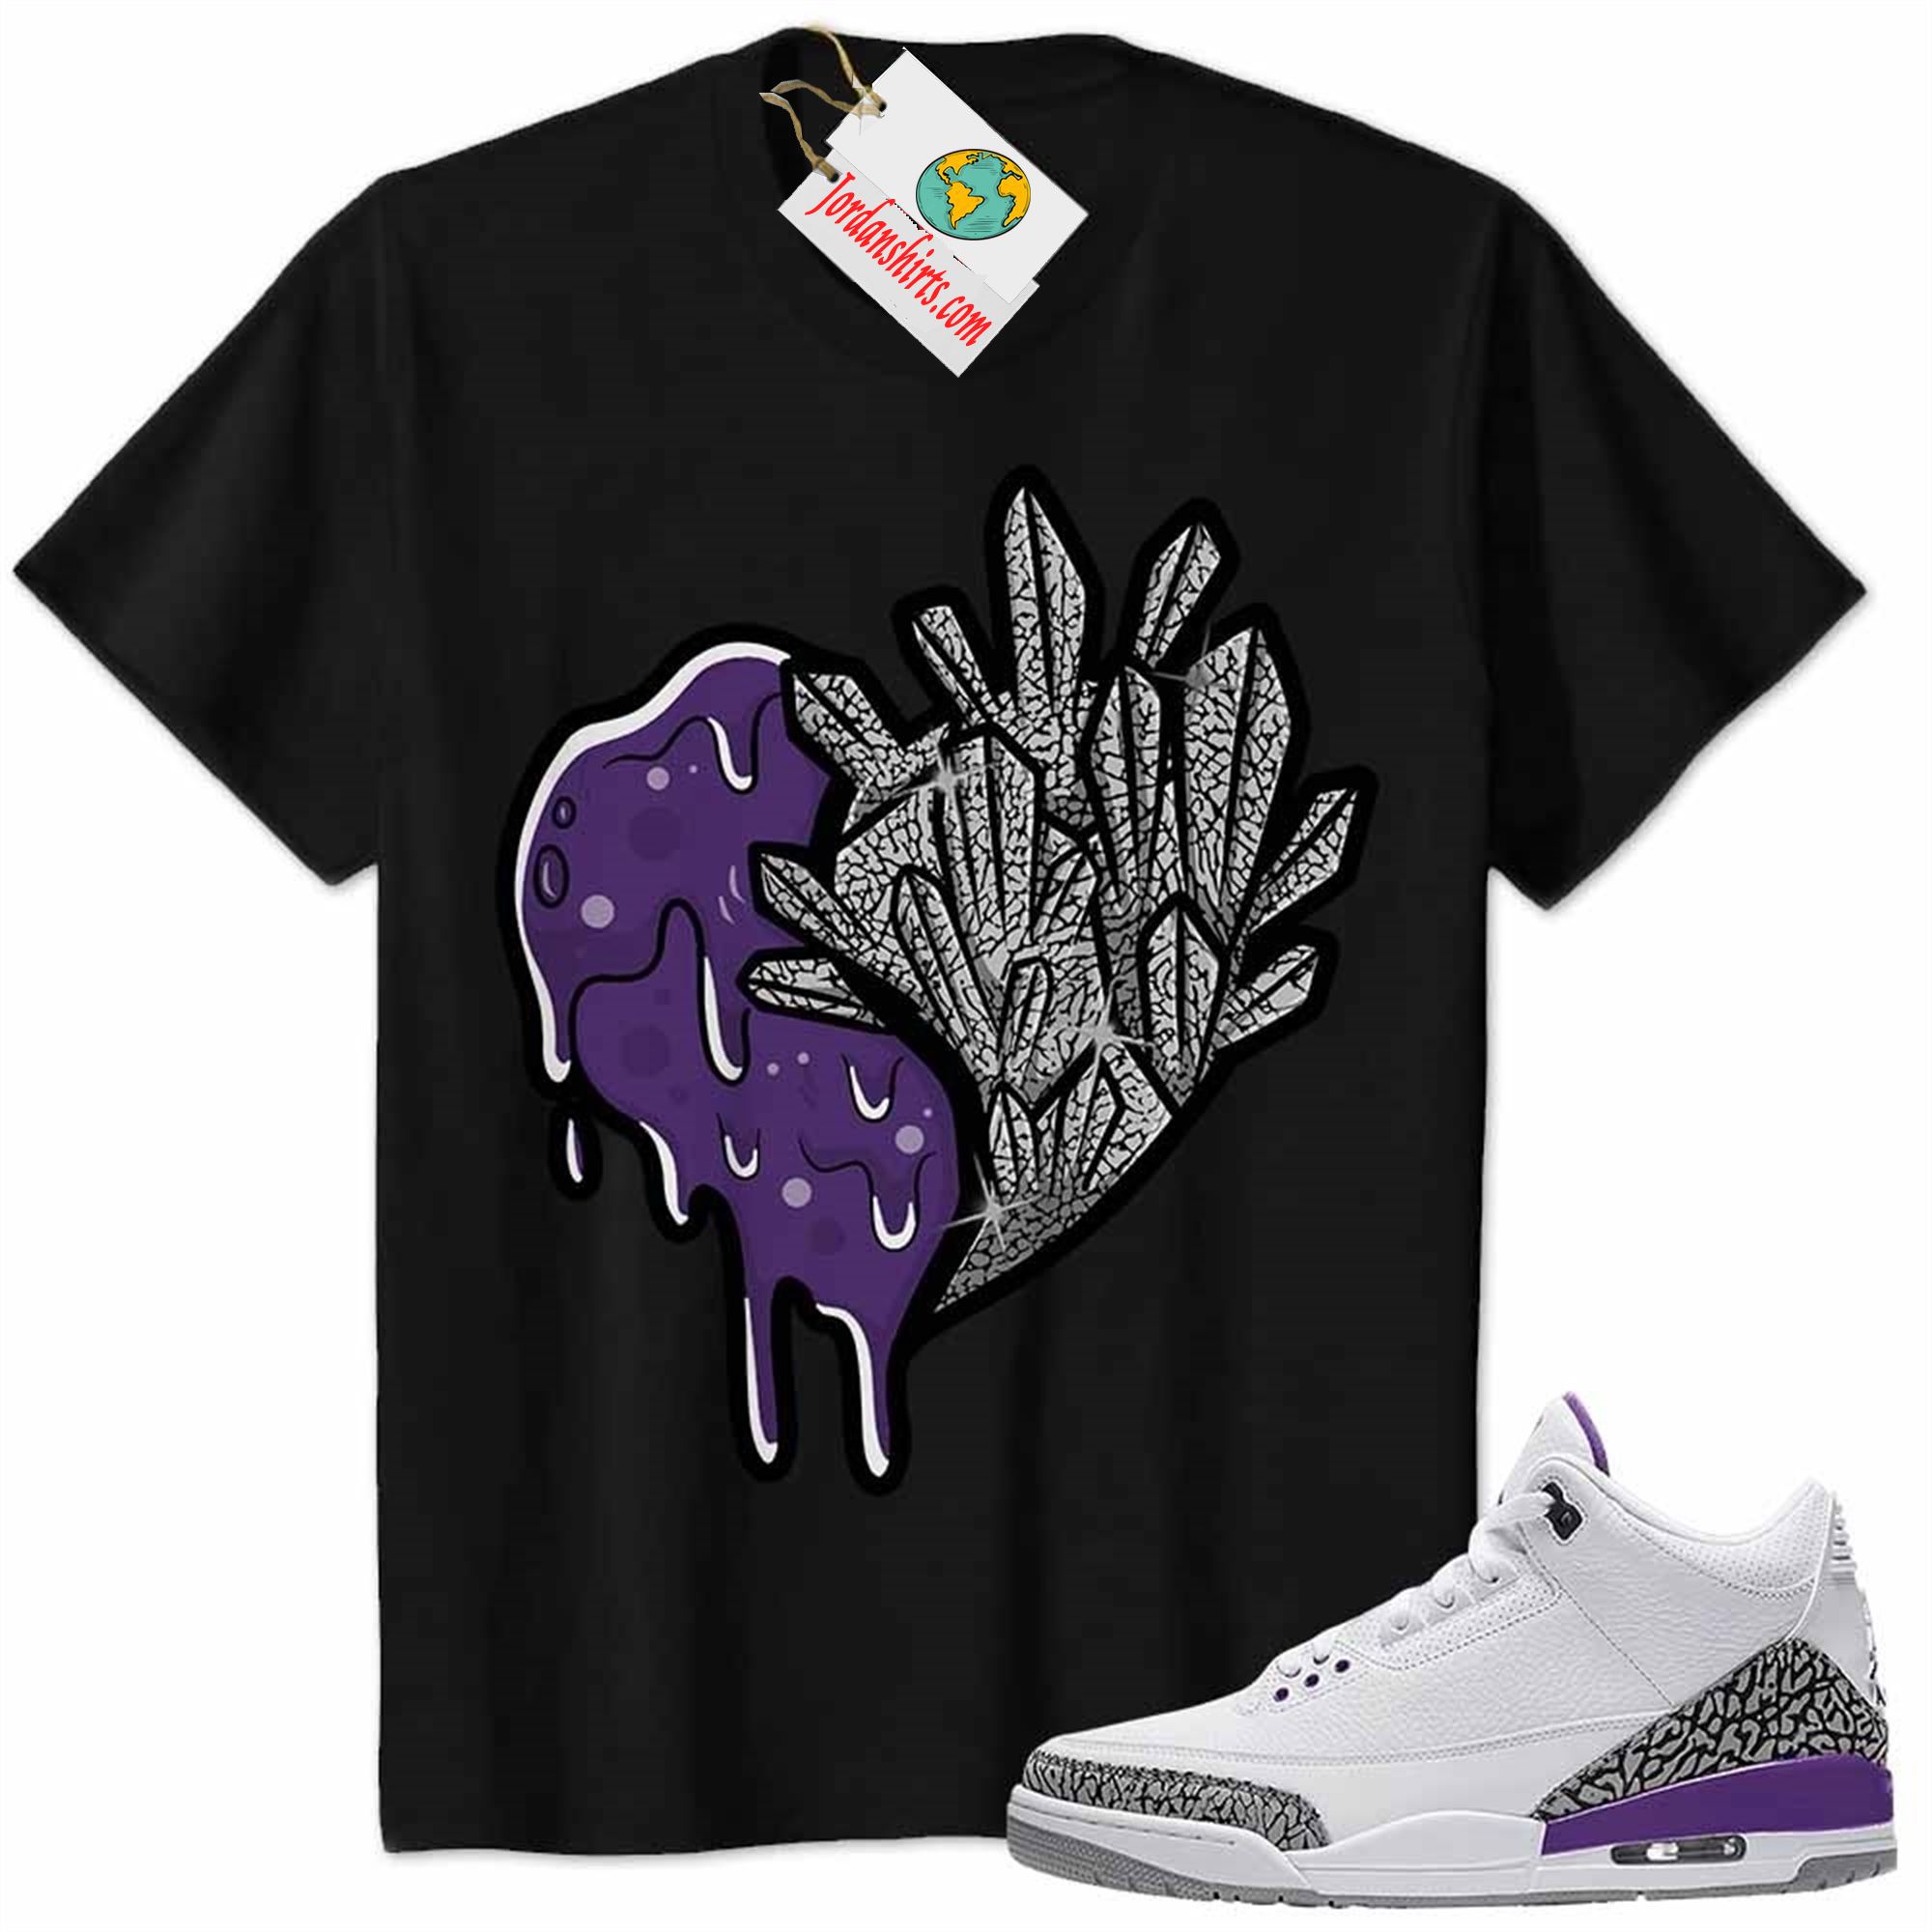 Jordan 3 Shirt, Crystal And Melt Heart Black Air Jordan 3 Wmns Dark Iris Violet Ore 3s Size Up To 5xl